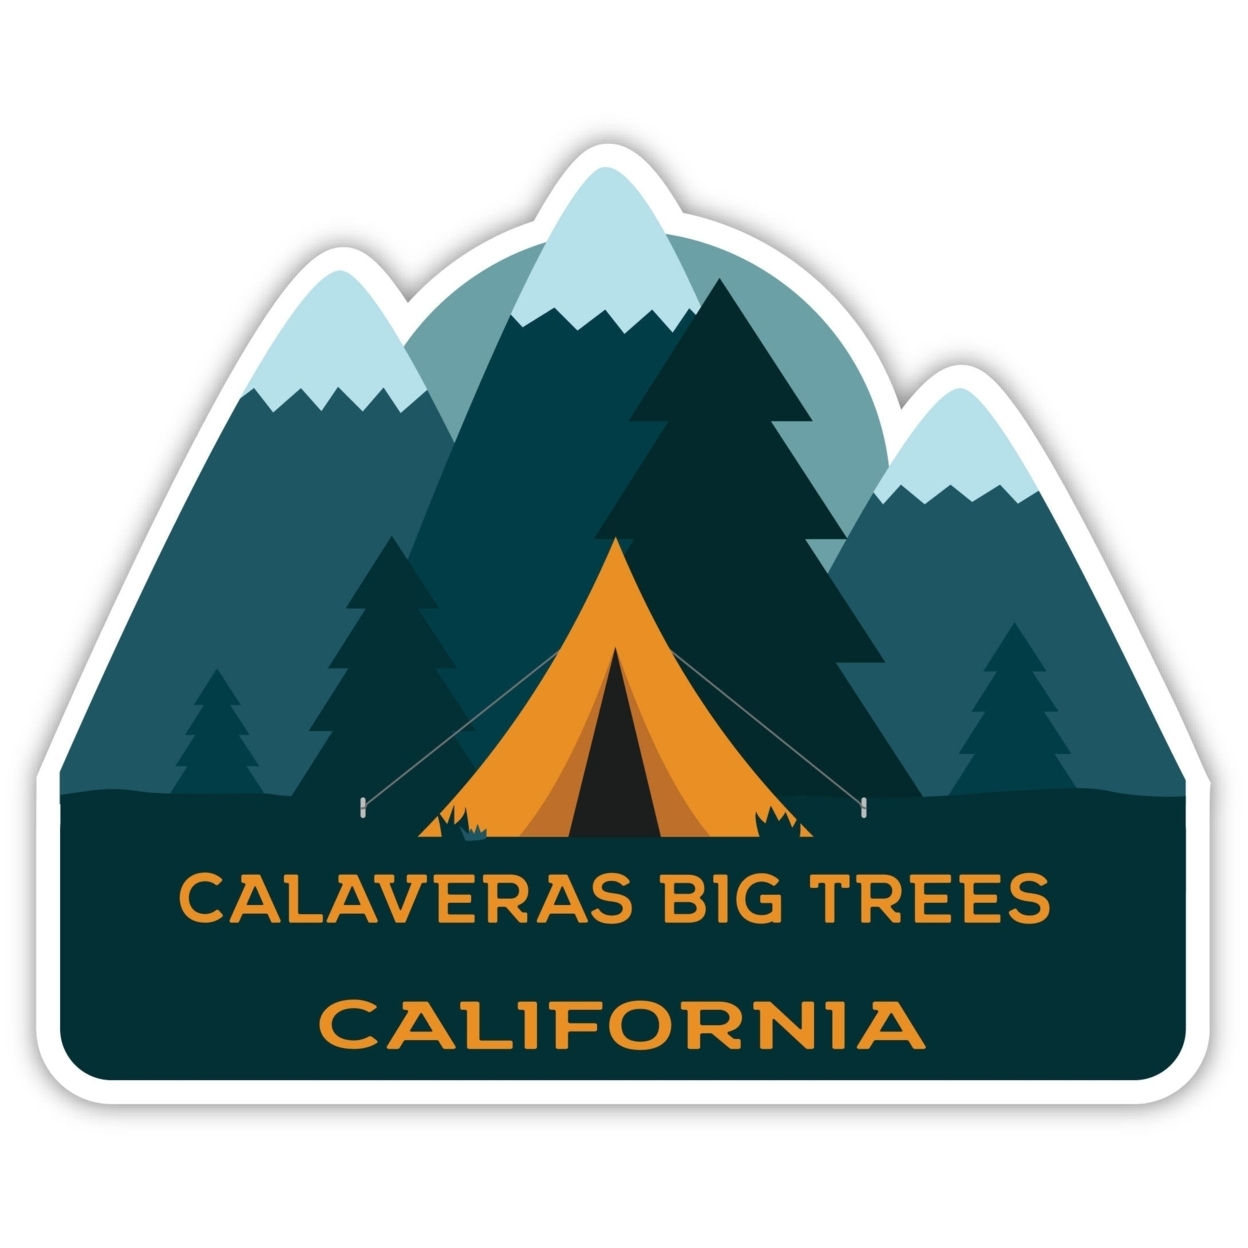 Calaveras Big Trees California Souvenir Decorative Stickers (Choose Theme And Size) - 4-Pack, 4-Inch, Camp Life